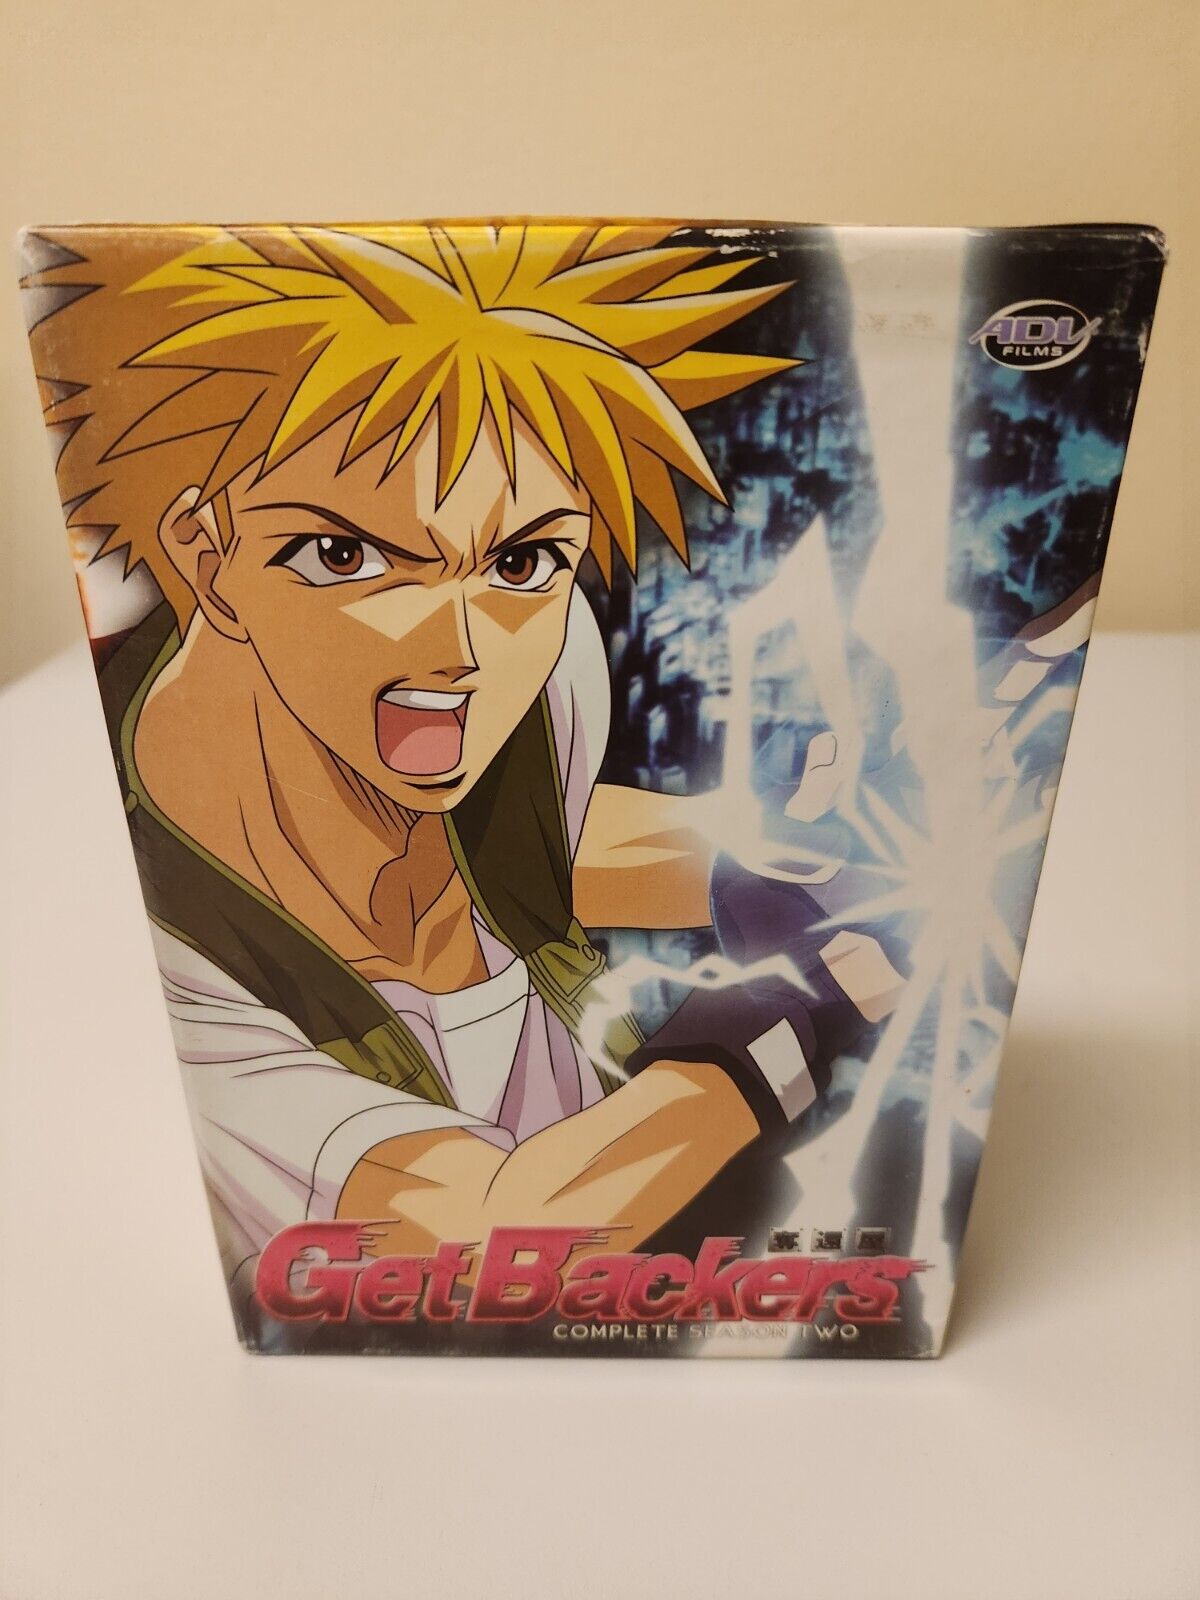 Get Backers: Complete Season 2-  5 DVD Box Set, 2007 Episodes Vol. 1-5